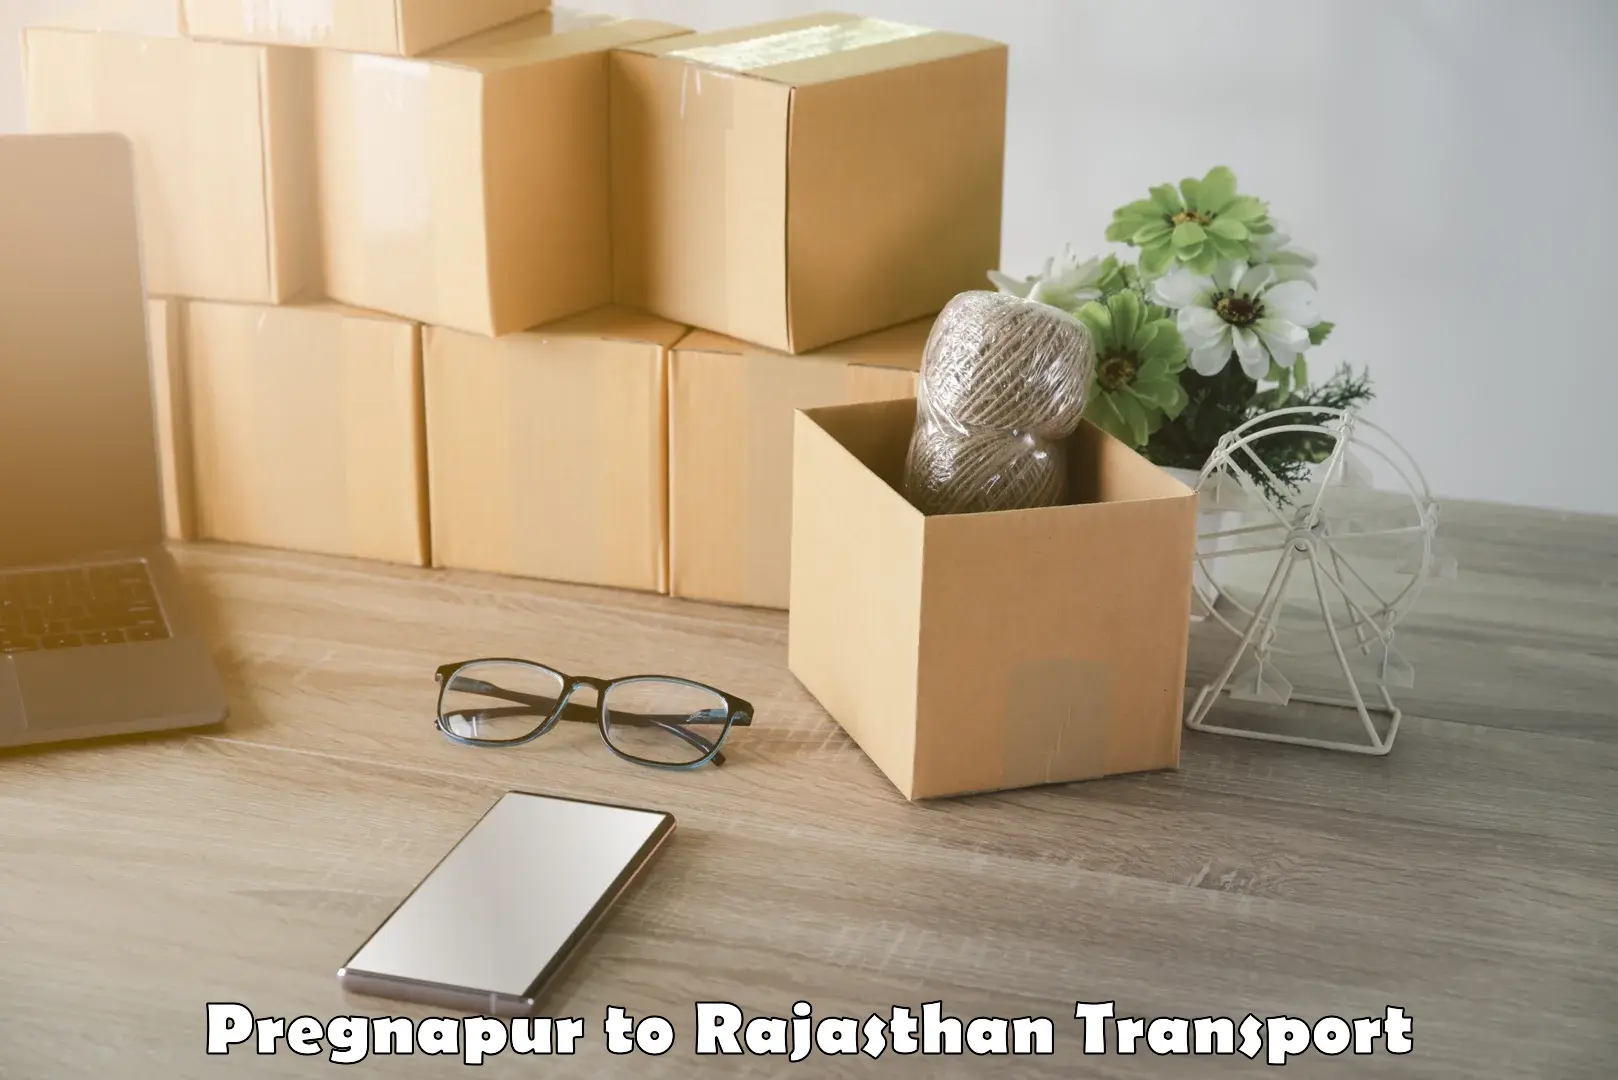 Daily parcel service transport in Pregnapur to Keshoraipatan